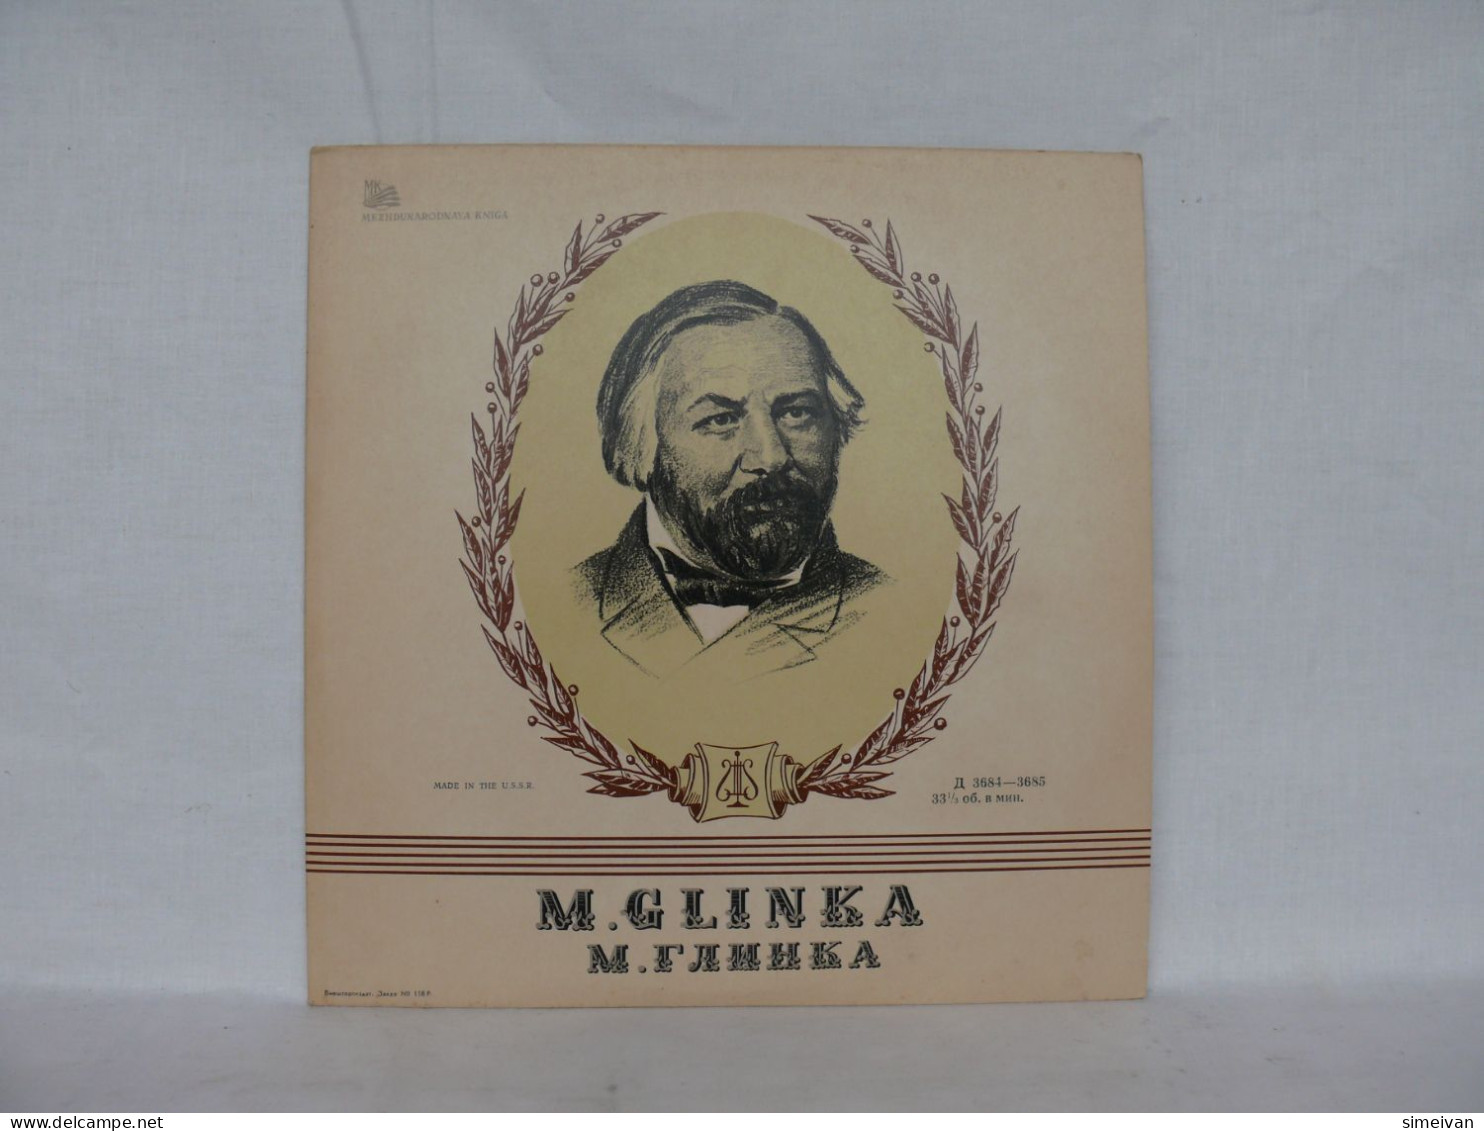 M. GLINKA "RUSLAND AND LUDMILA" "IVAN SUSANIN" VINYL MADE IN USSR D3684-5 #1680 - Opera / Operette